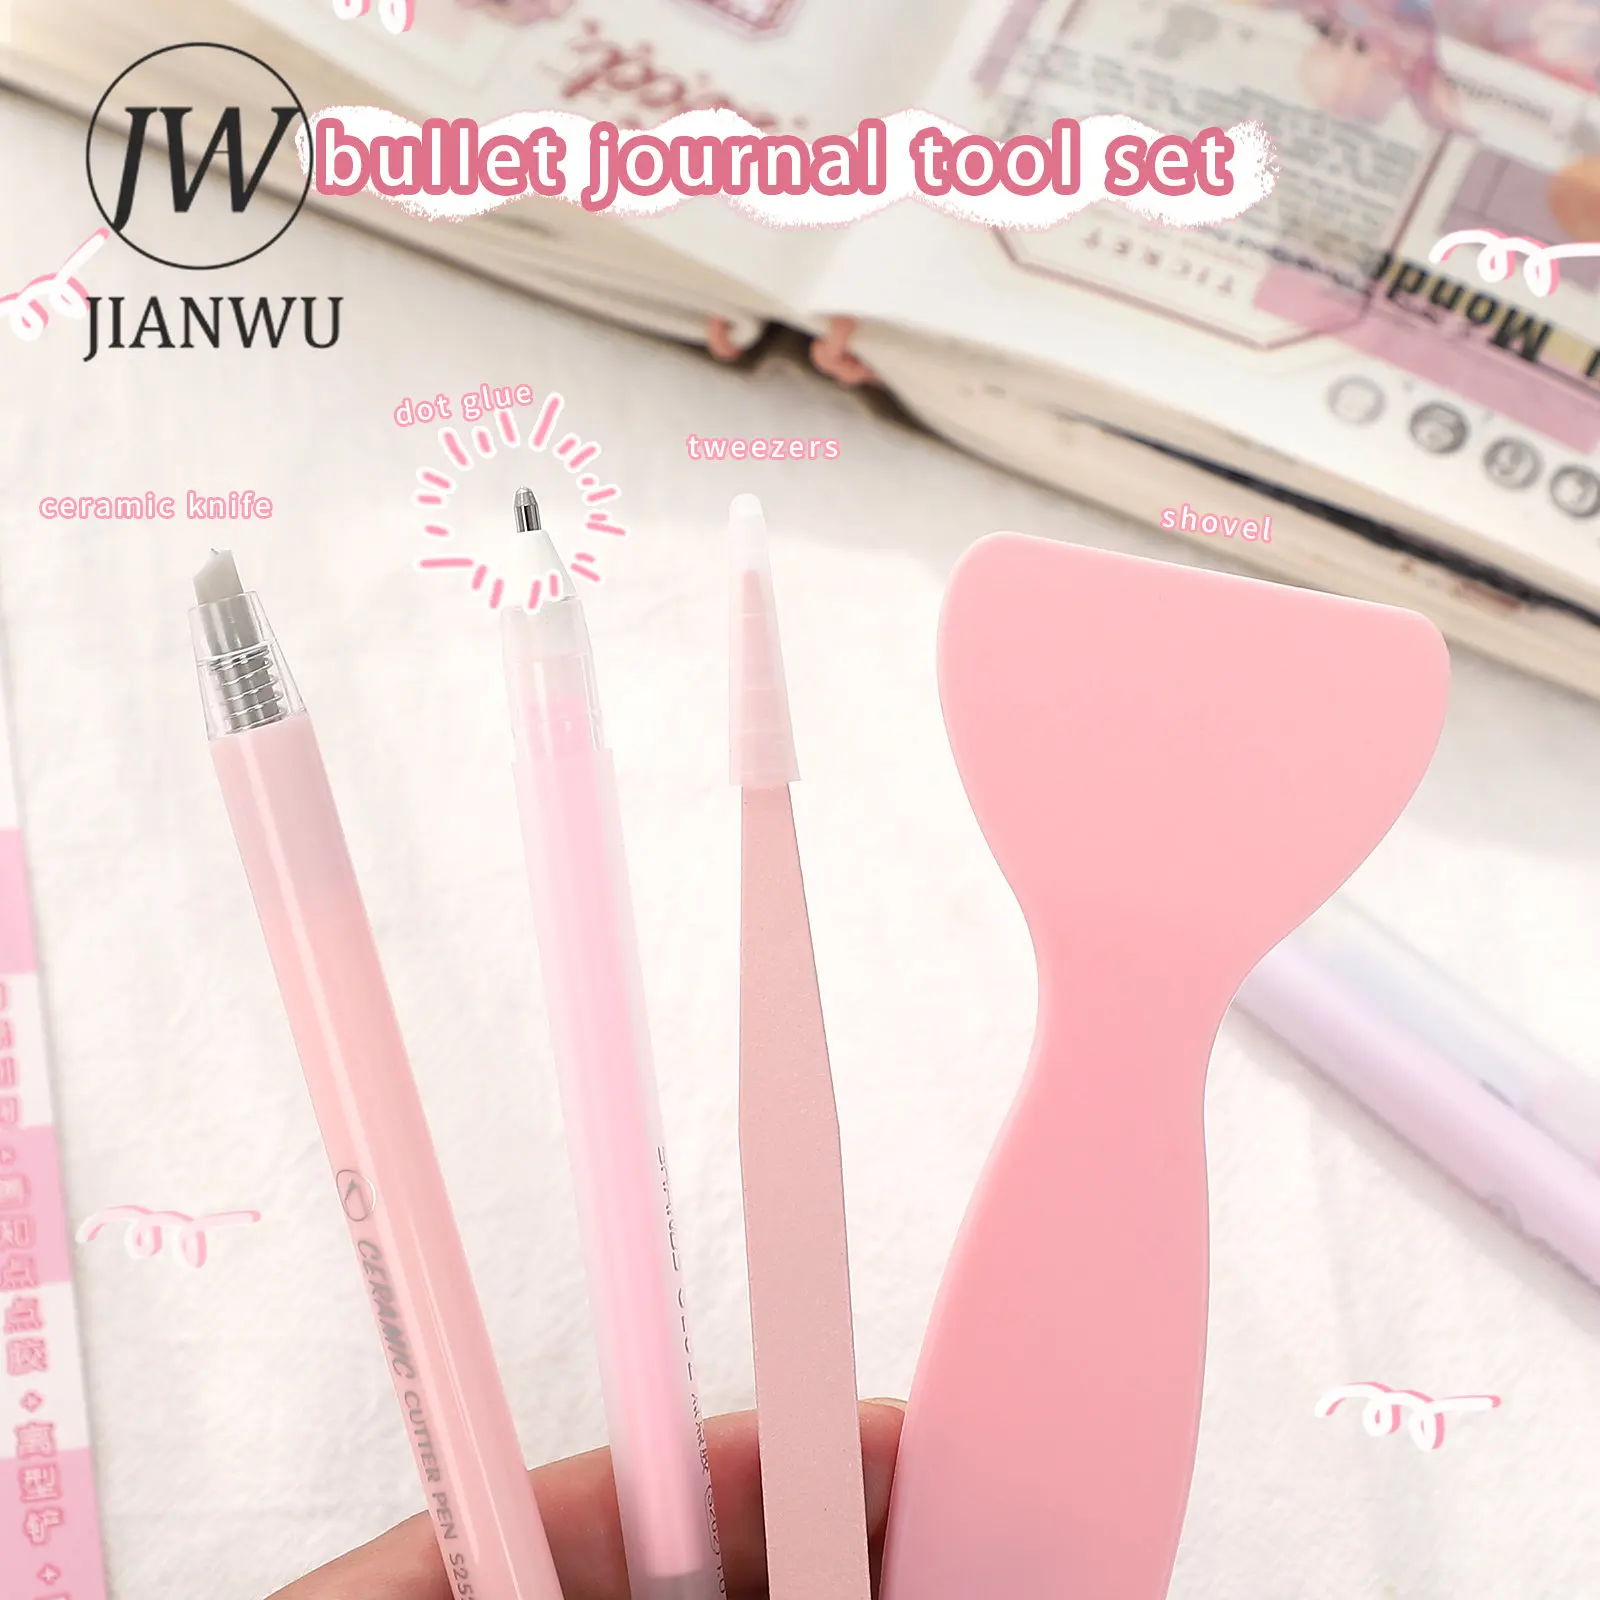 JIANWU 4 Pcs Cute Journal Tools Stationery Set Creative Dot Glue Pen Carving Knife Shovel Tweezers DIY Handmade School Supplies